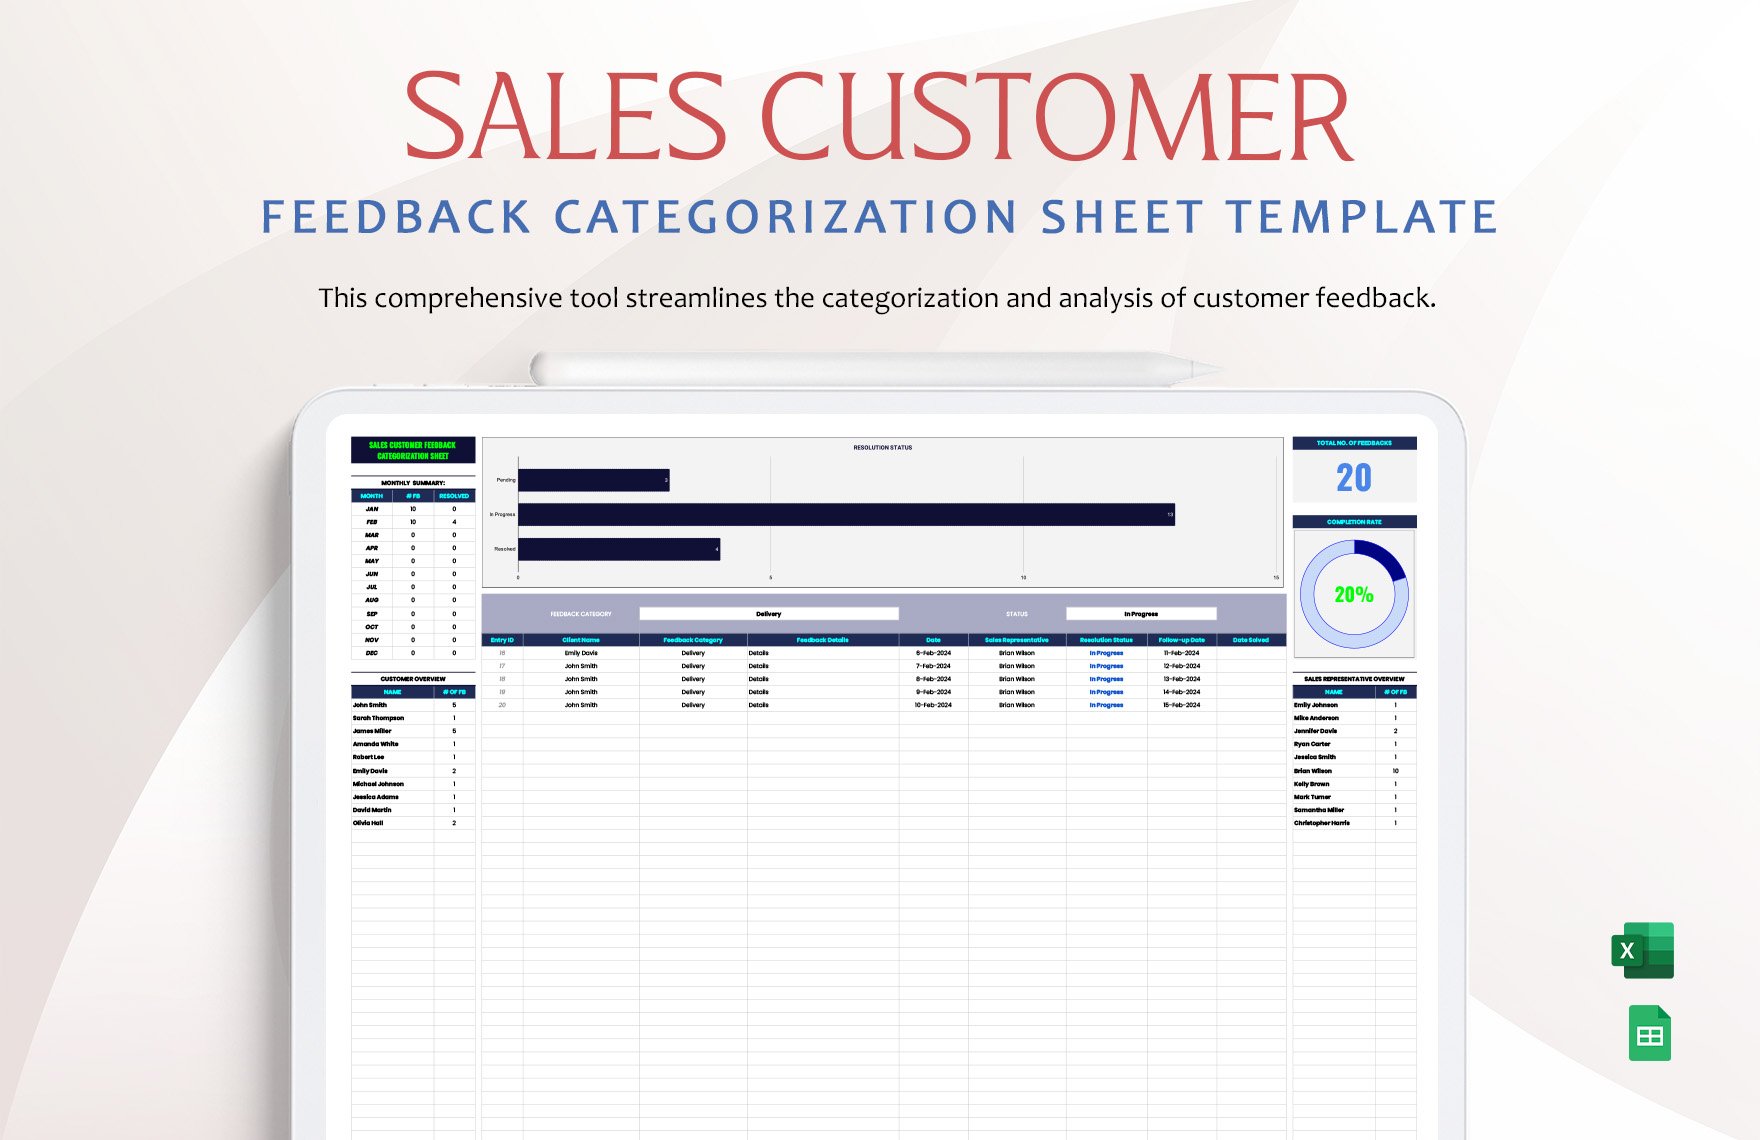 Sales Customer Feedback Categorization Sheet Template in Excel, Google Sheets